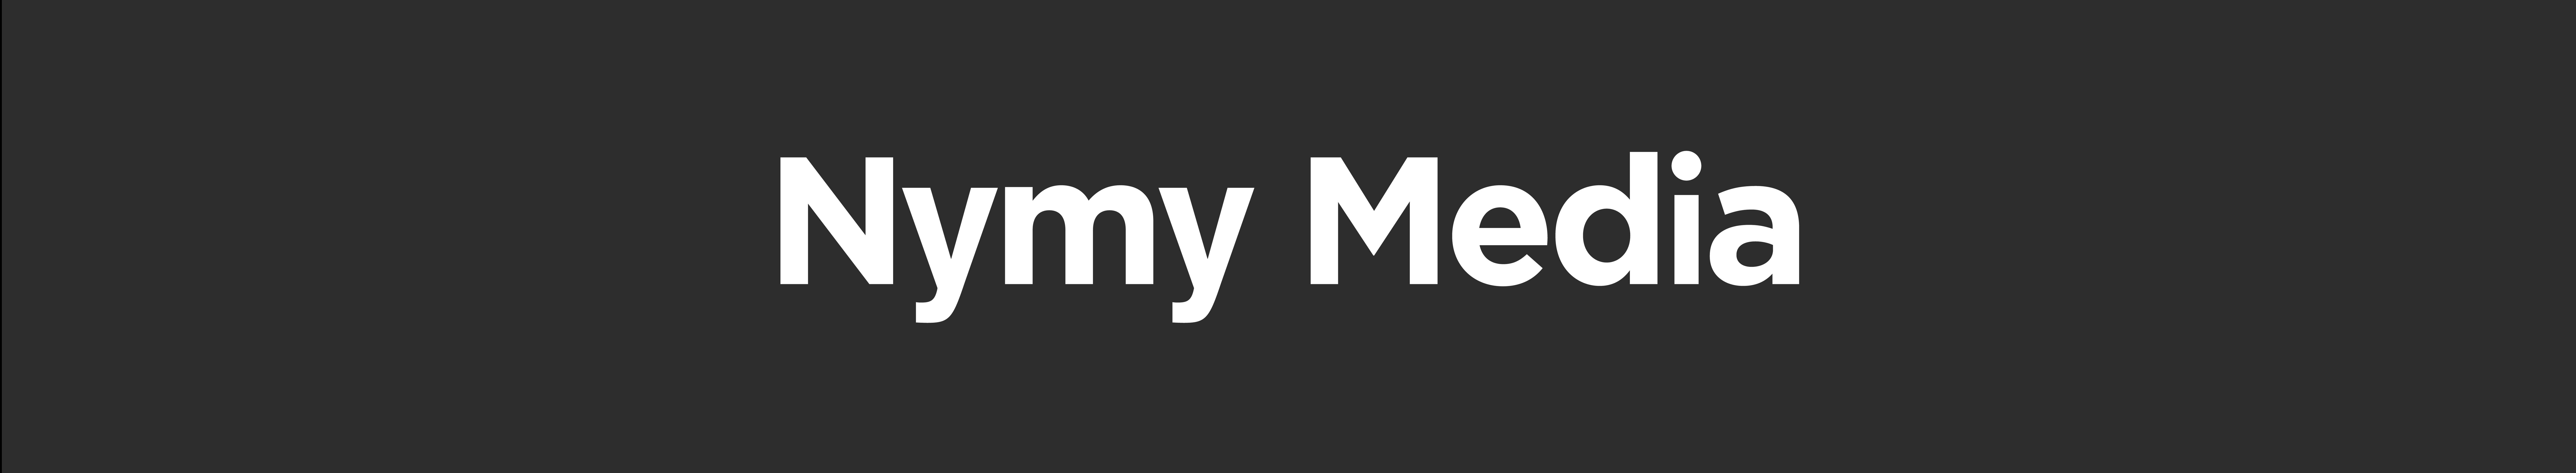 Nymy Media's profile banner